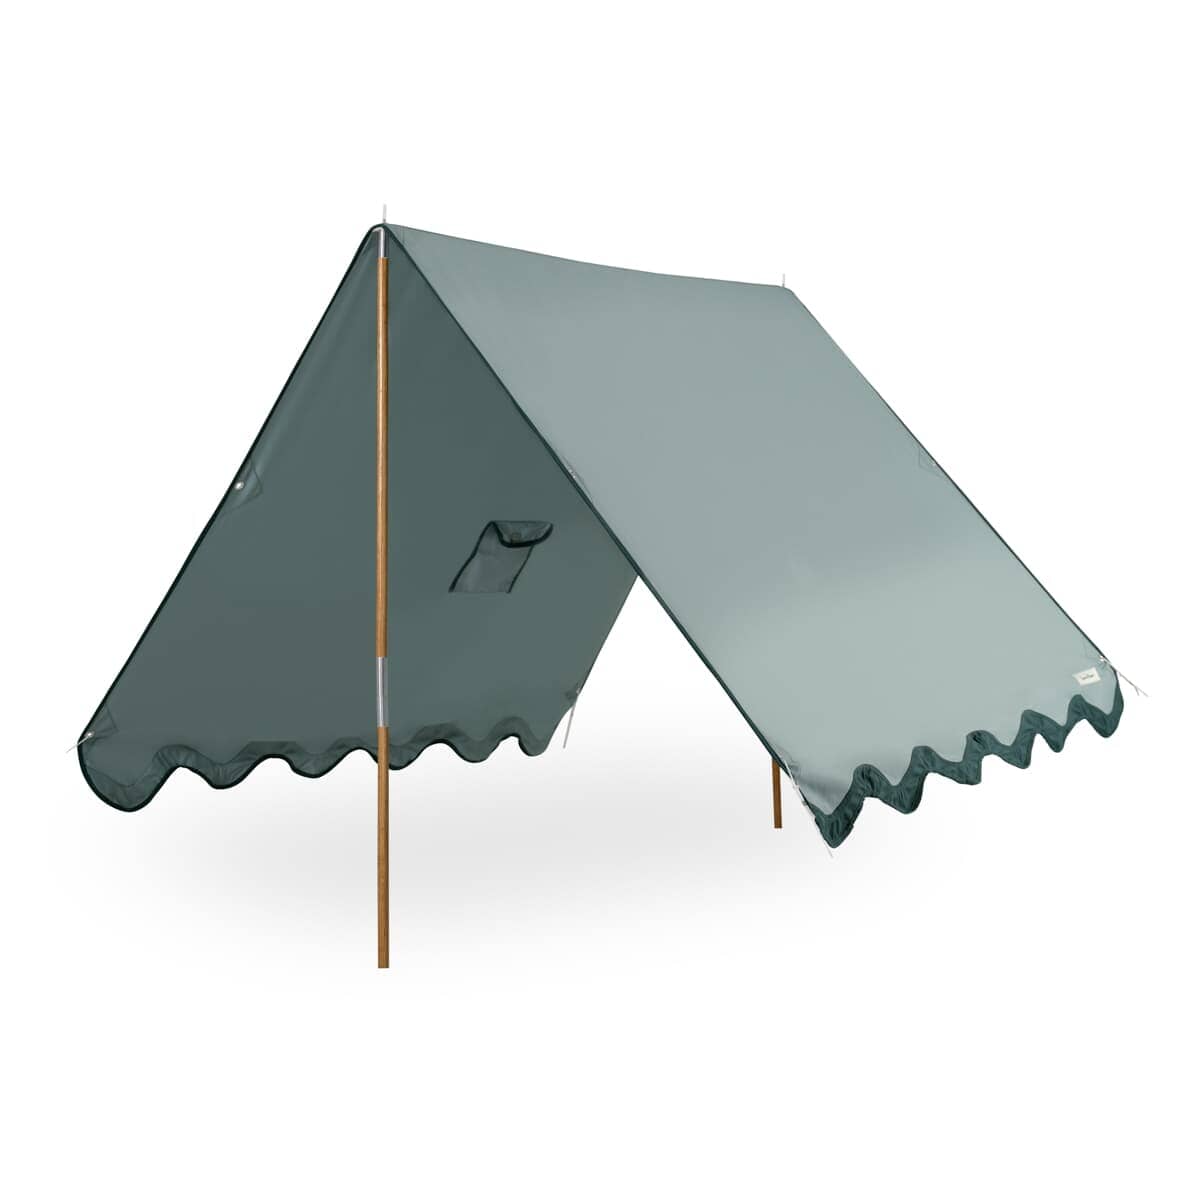 Studio image of riviera green tent